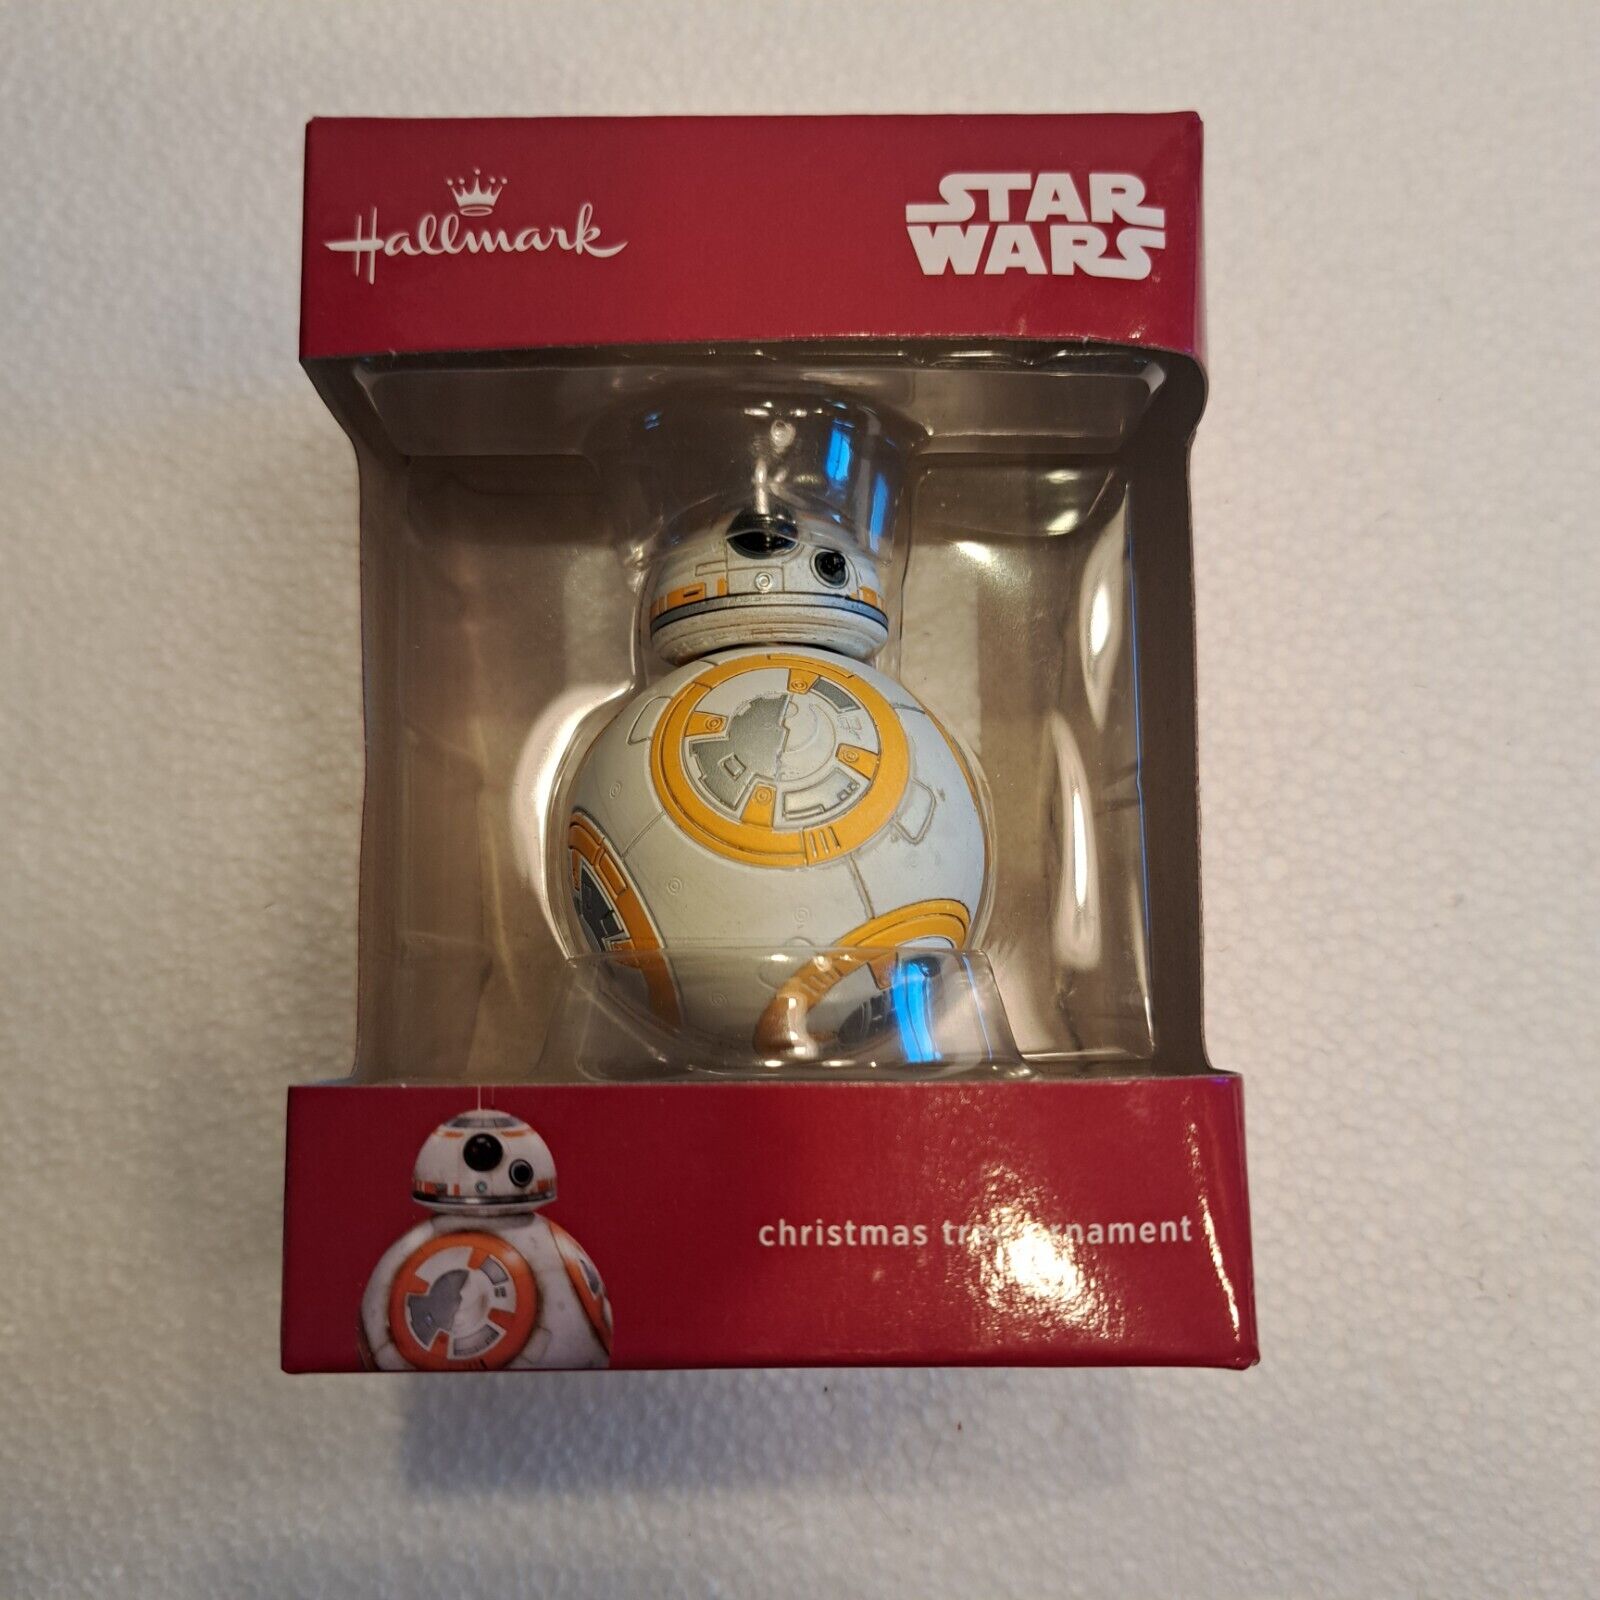 Hallmark STAR WARS Christmas Tree Ornament:  BB-8 - NEW IN BOX